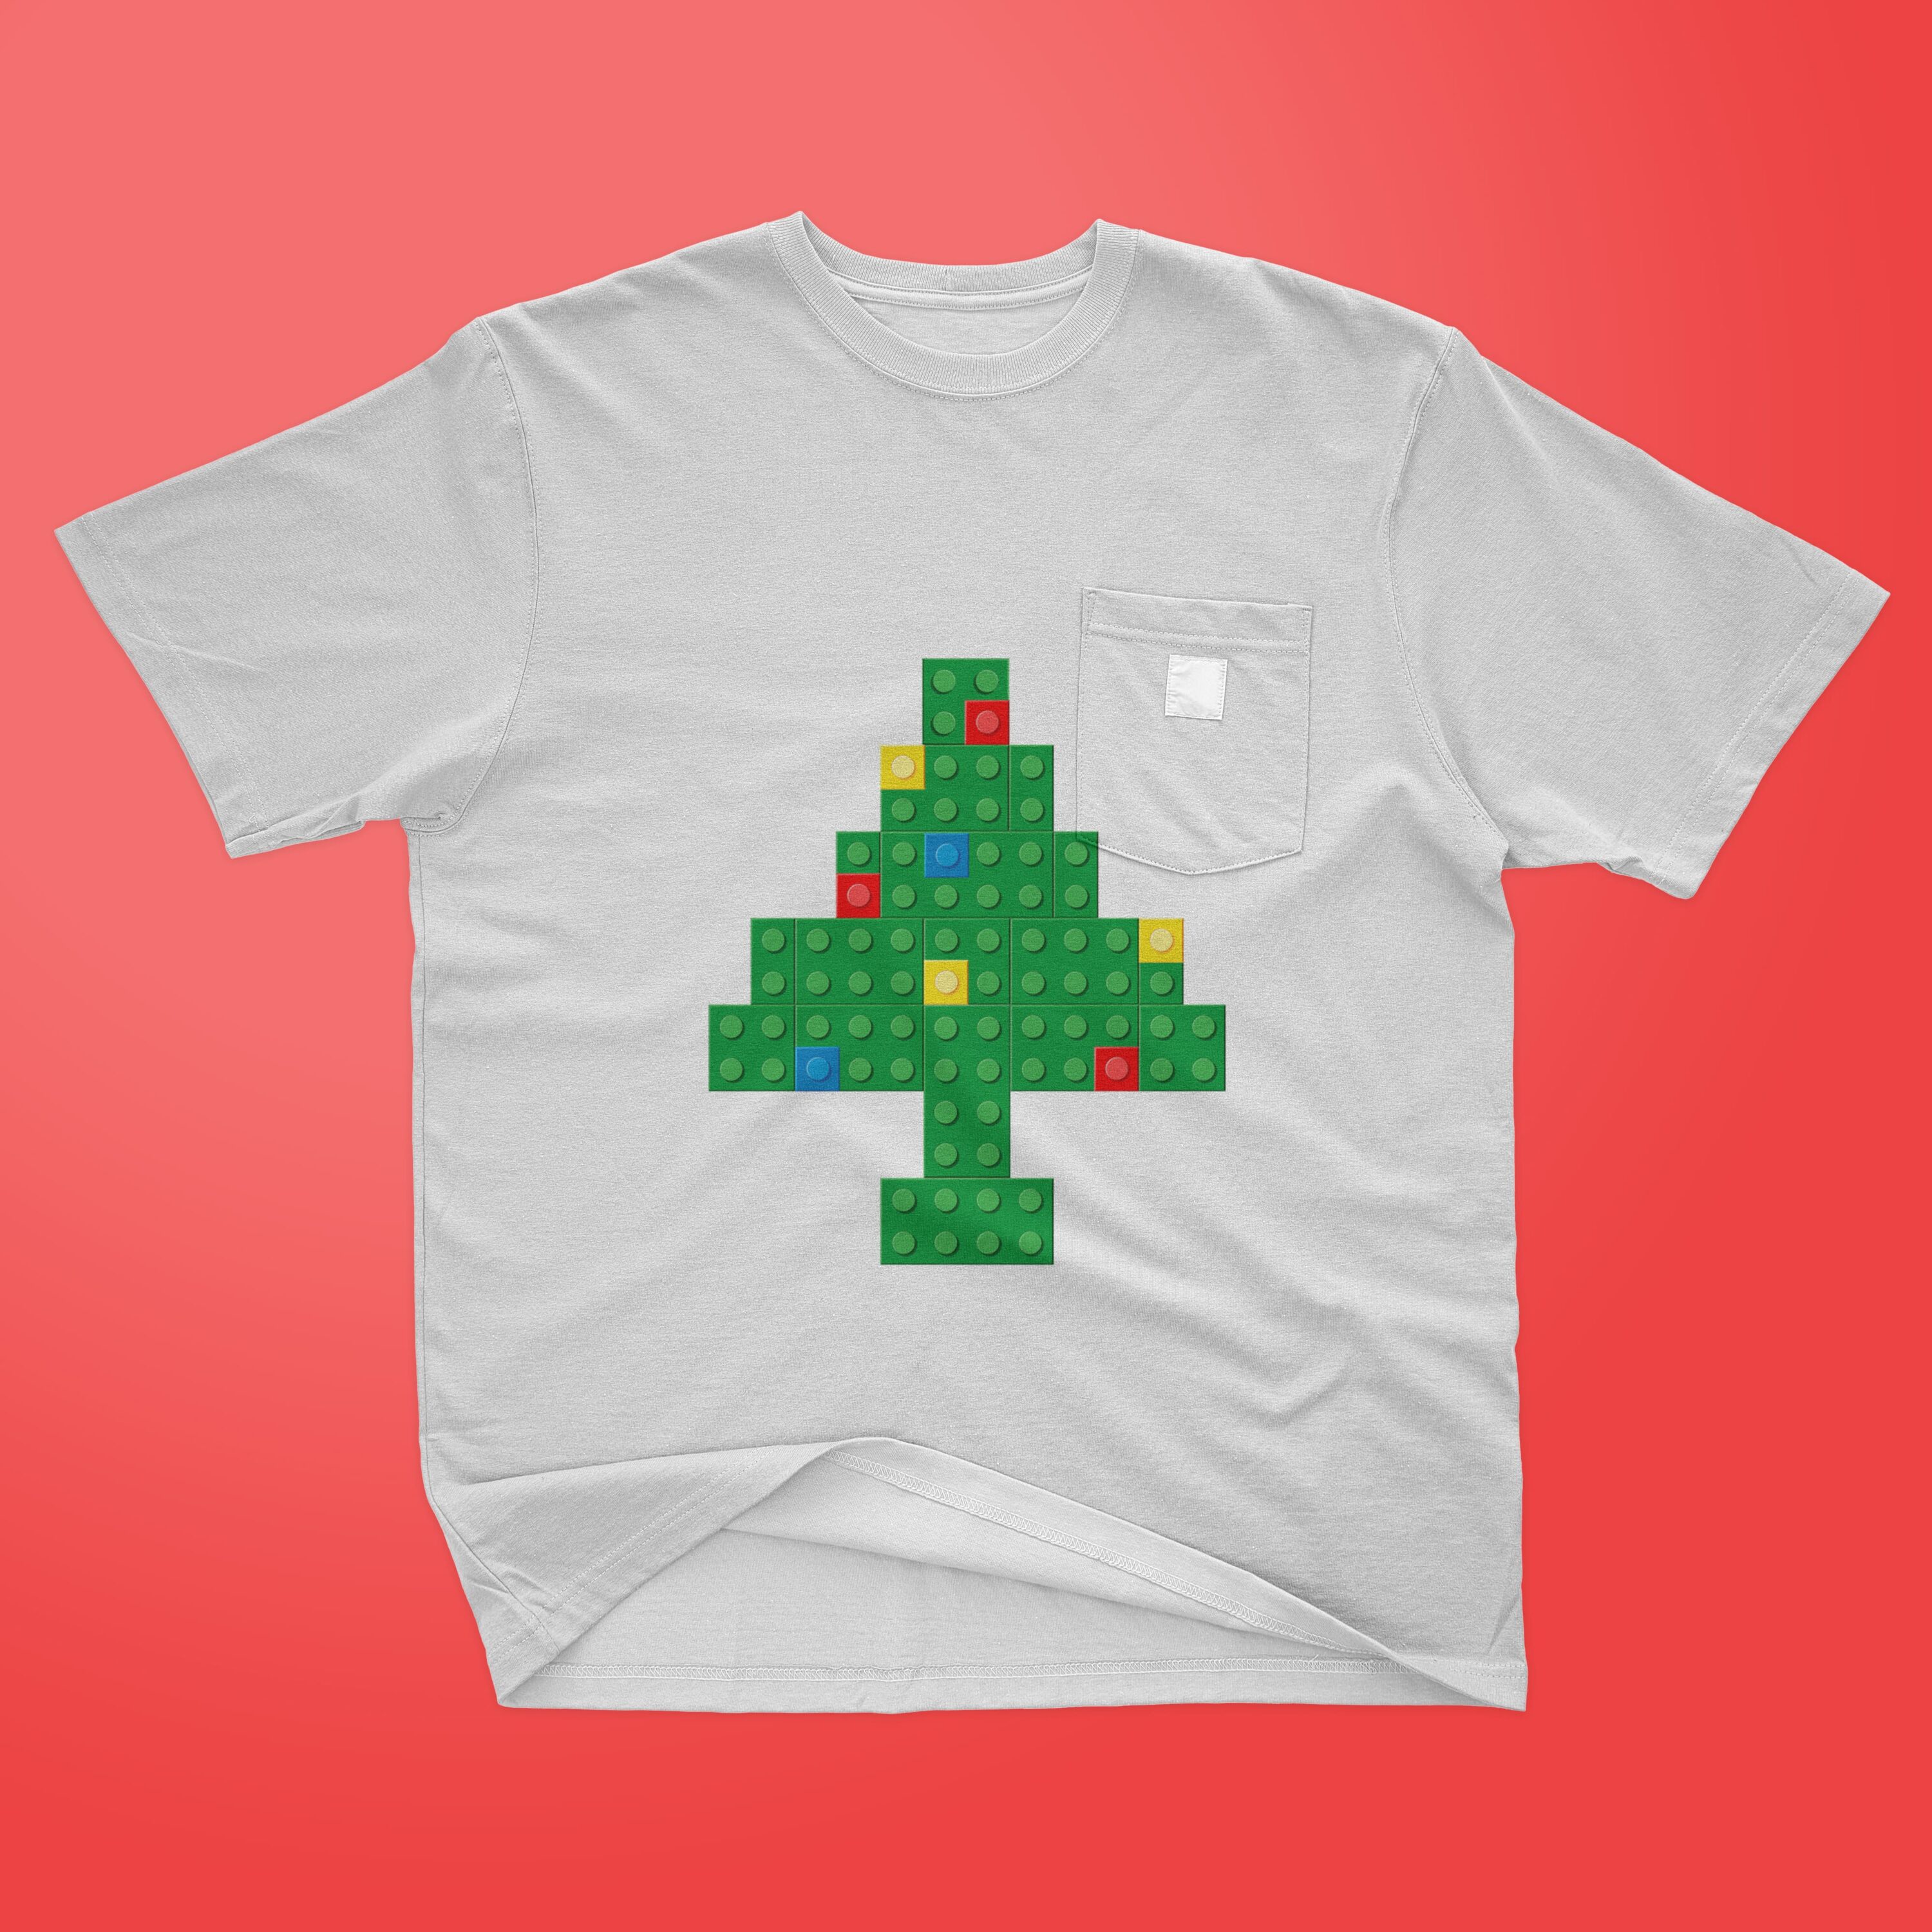 Lego christmas tree printed on the t-shirt.